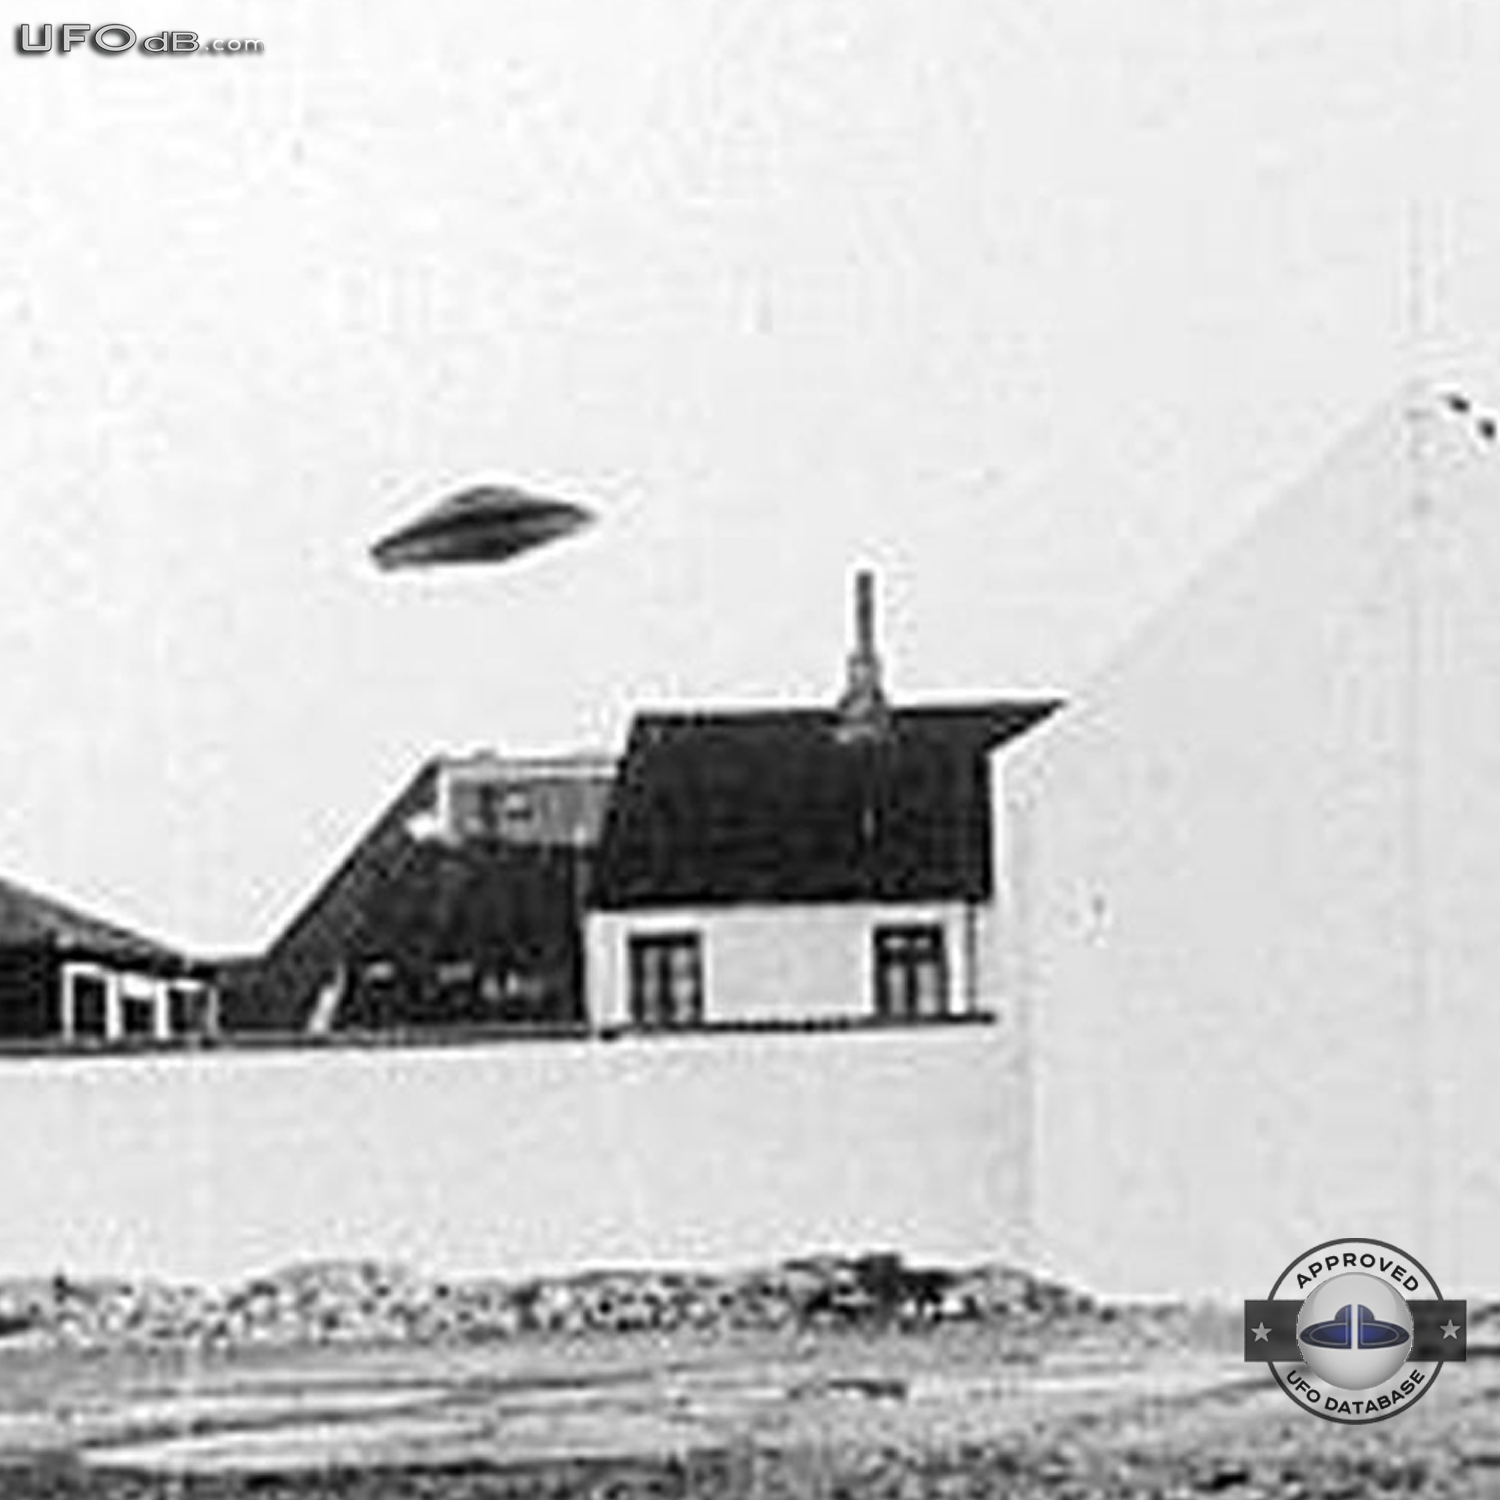 Aarhus Denmark - Rare Classic Saucer Shape UFO picture | November 1971 UFO Picture #320-3